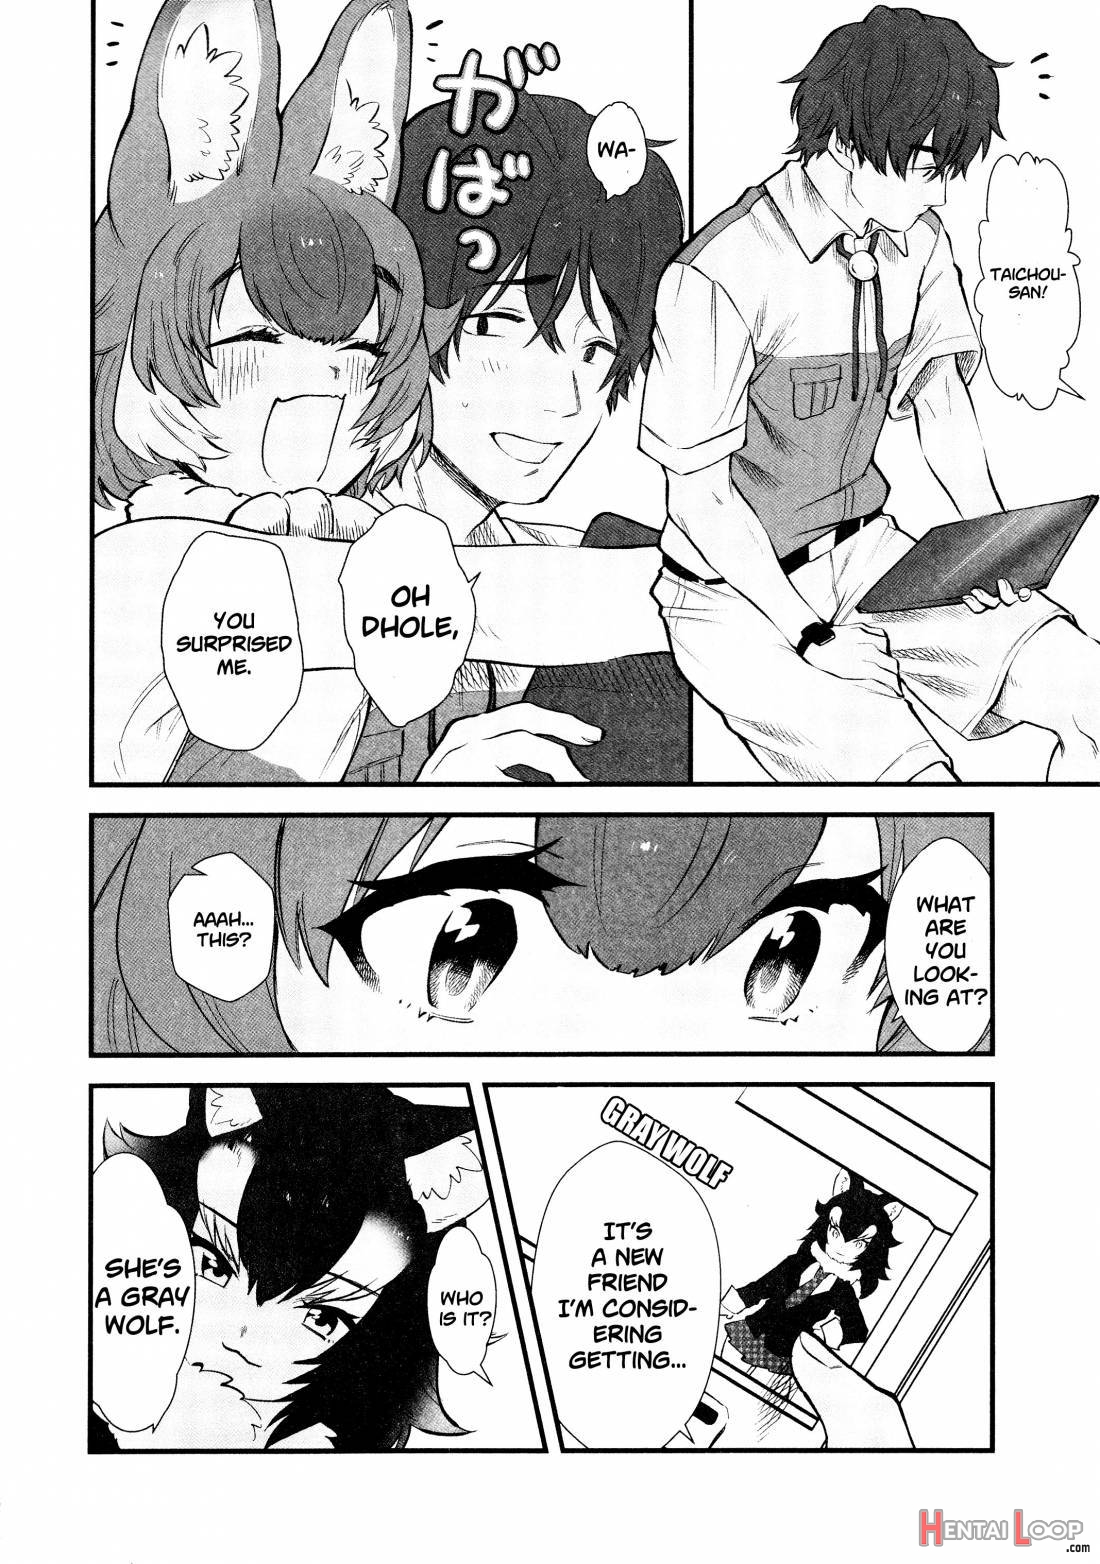 Taichou-san And Dhole-chan. page 4